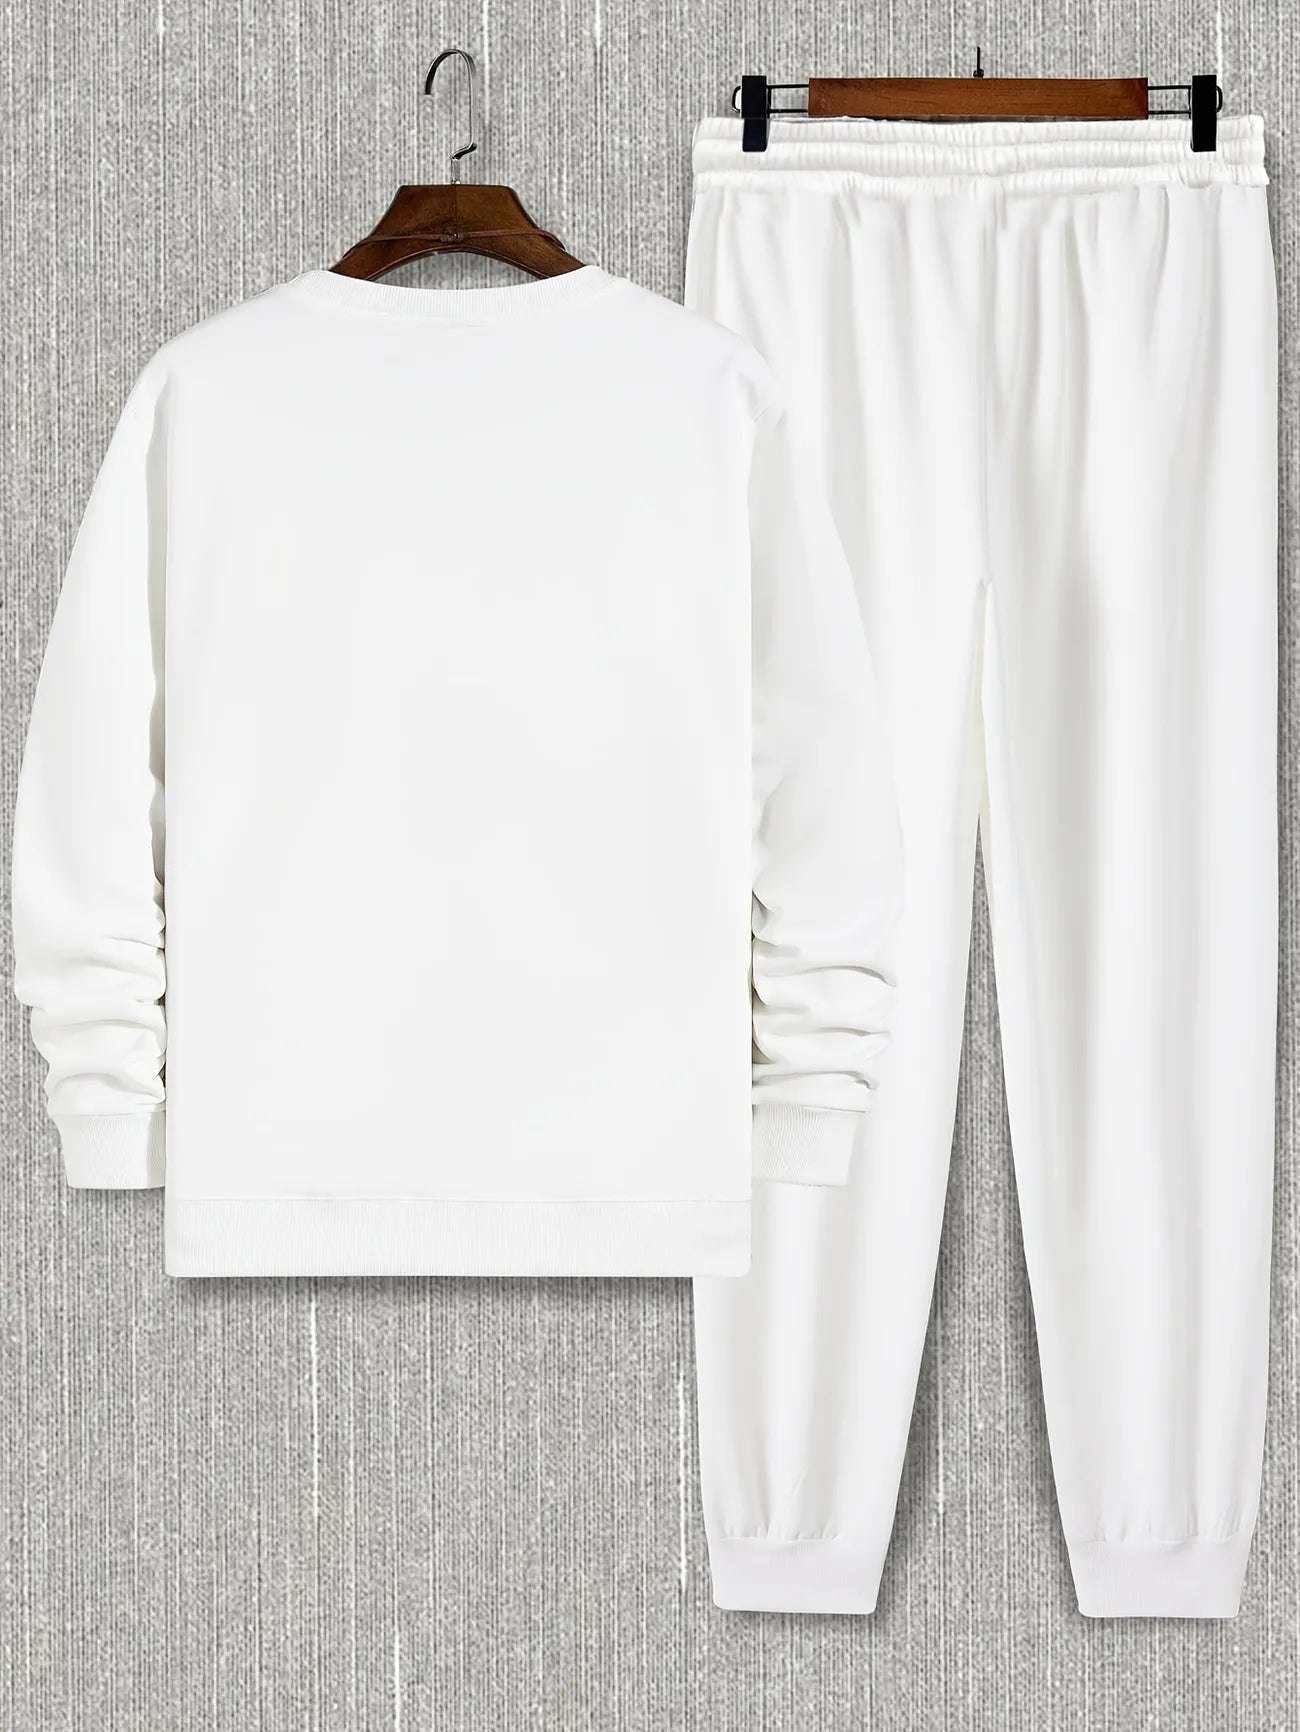 Mens Sweatshirt and Pants Set by Tee Tall - MSPSTT23 - White White